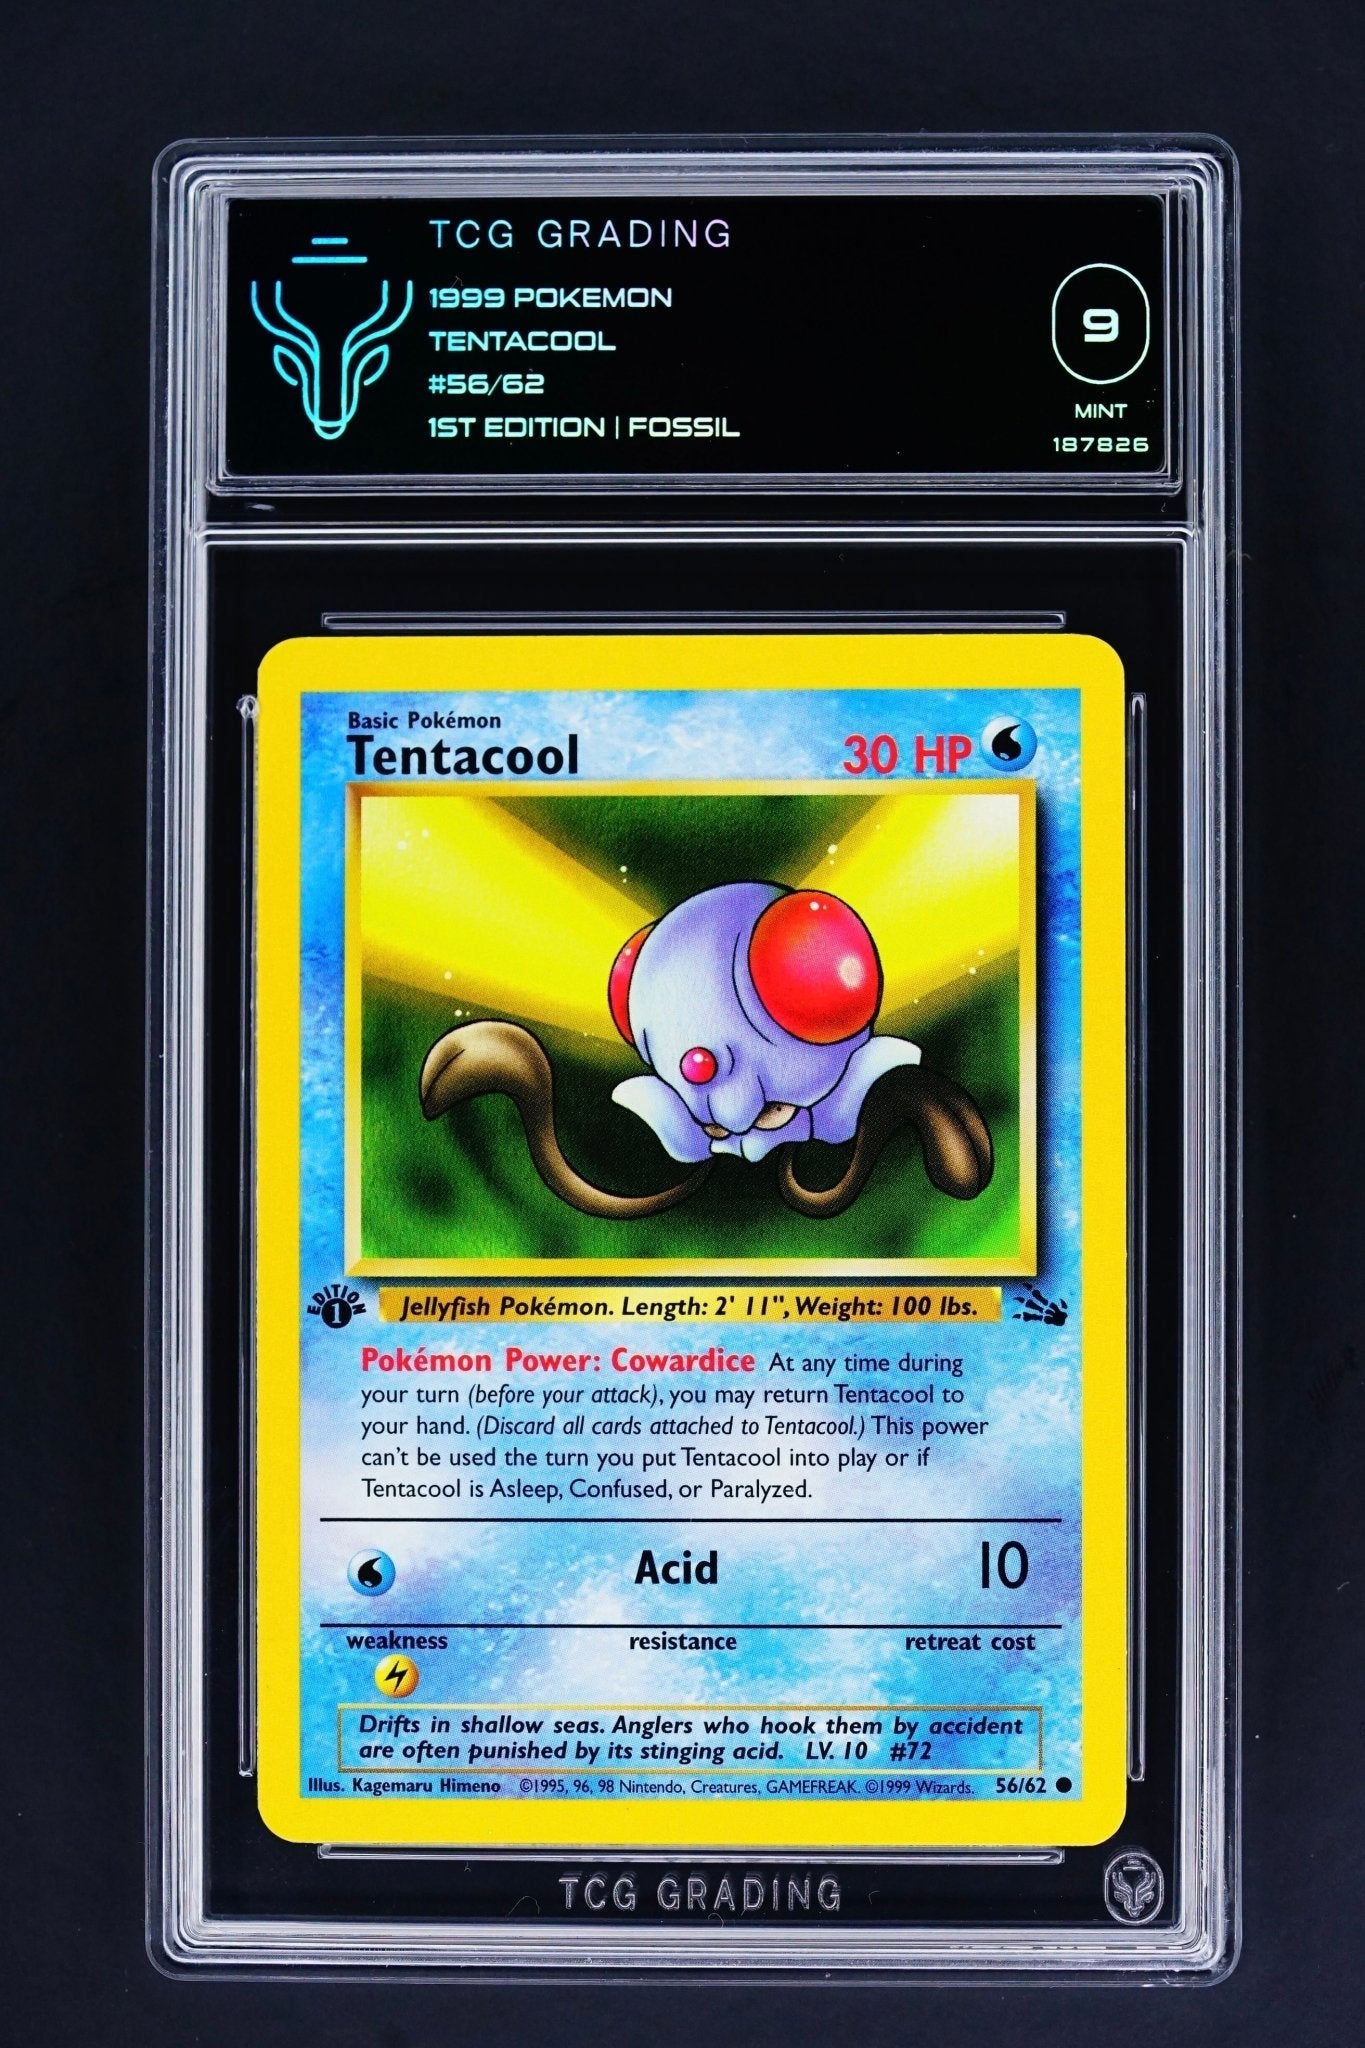 Pokemon Card: Tentacool 56/62 1st Edition Fossil TCG 9 - THE CARD SPOT PTY LTD.GradedPokémon